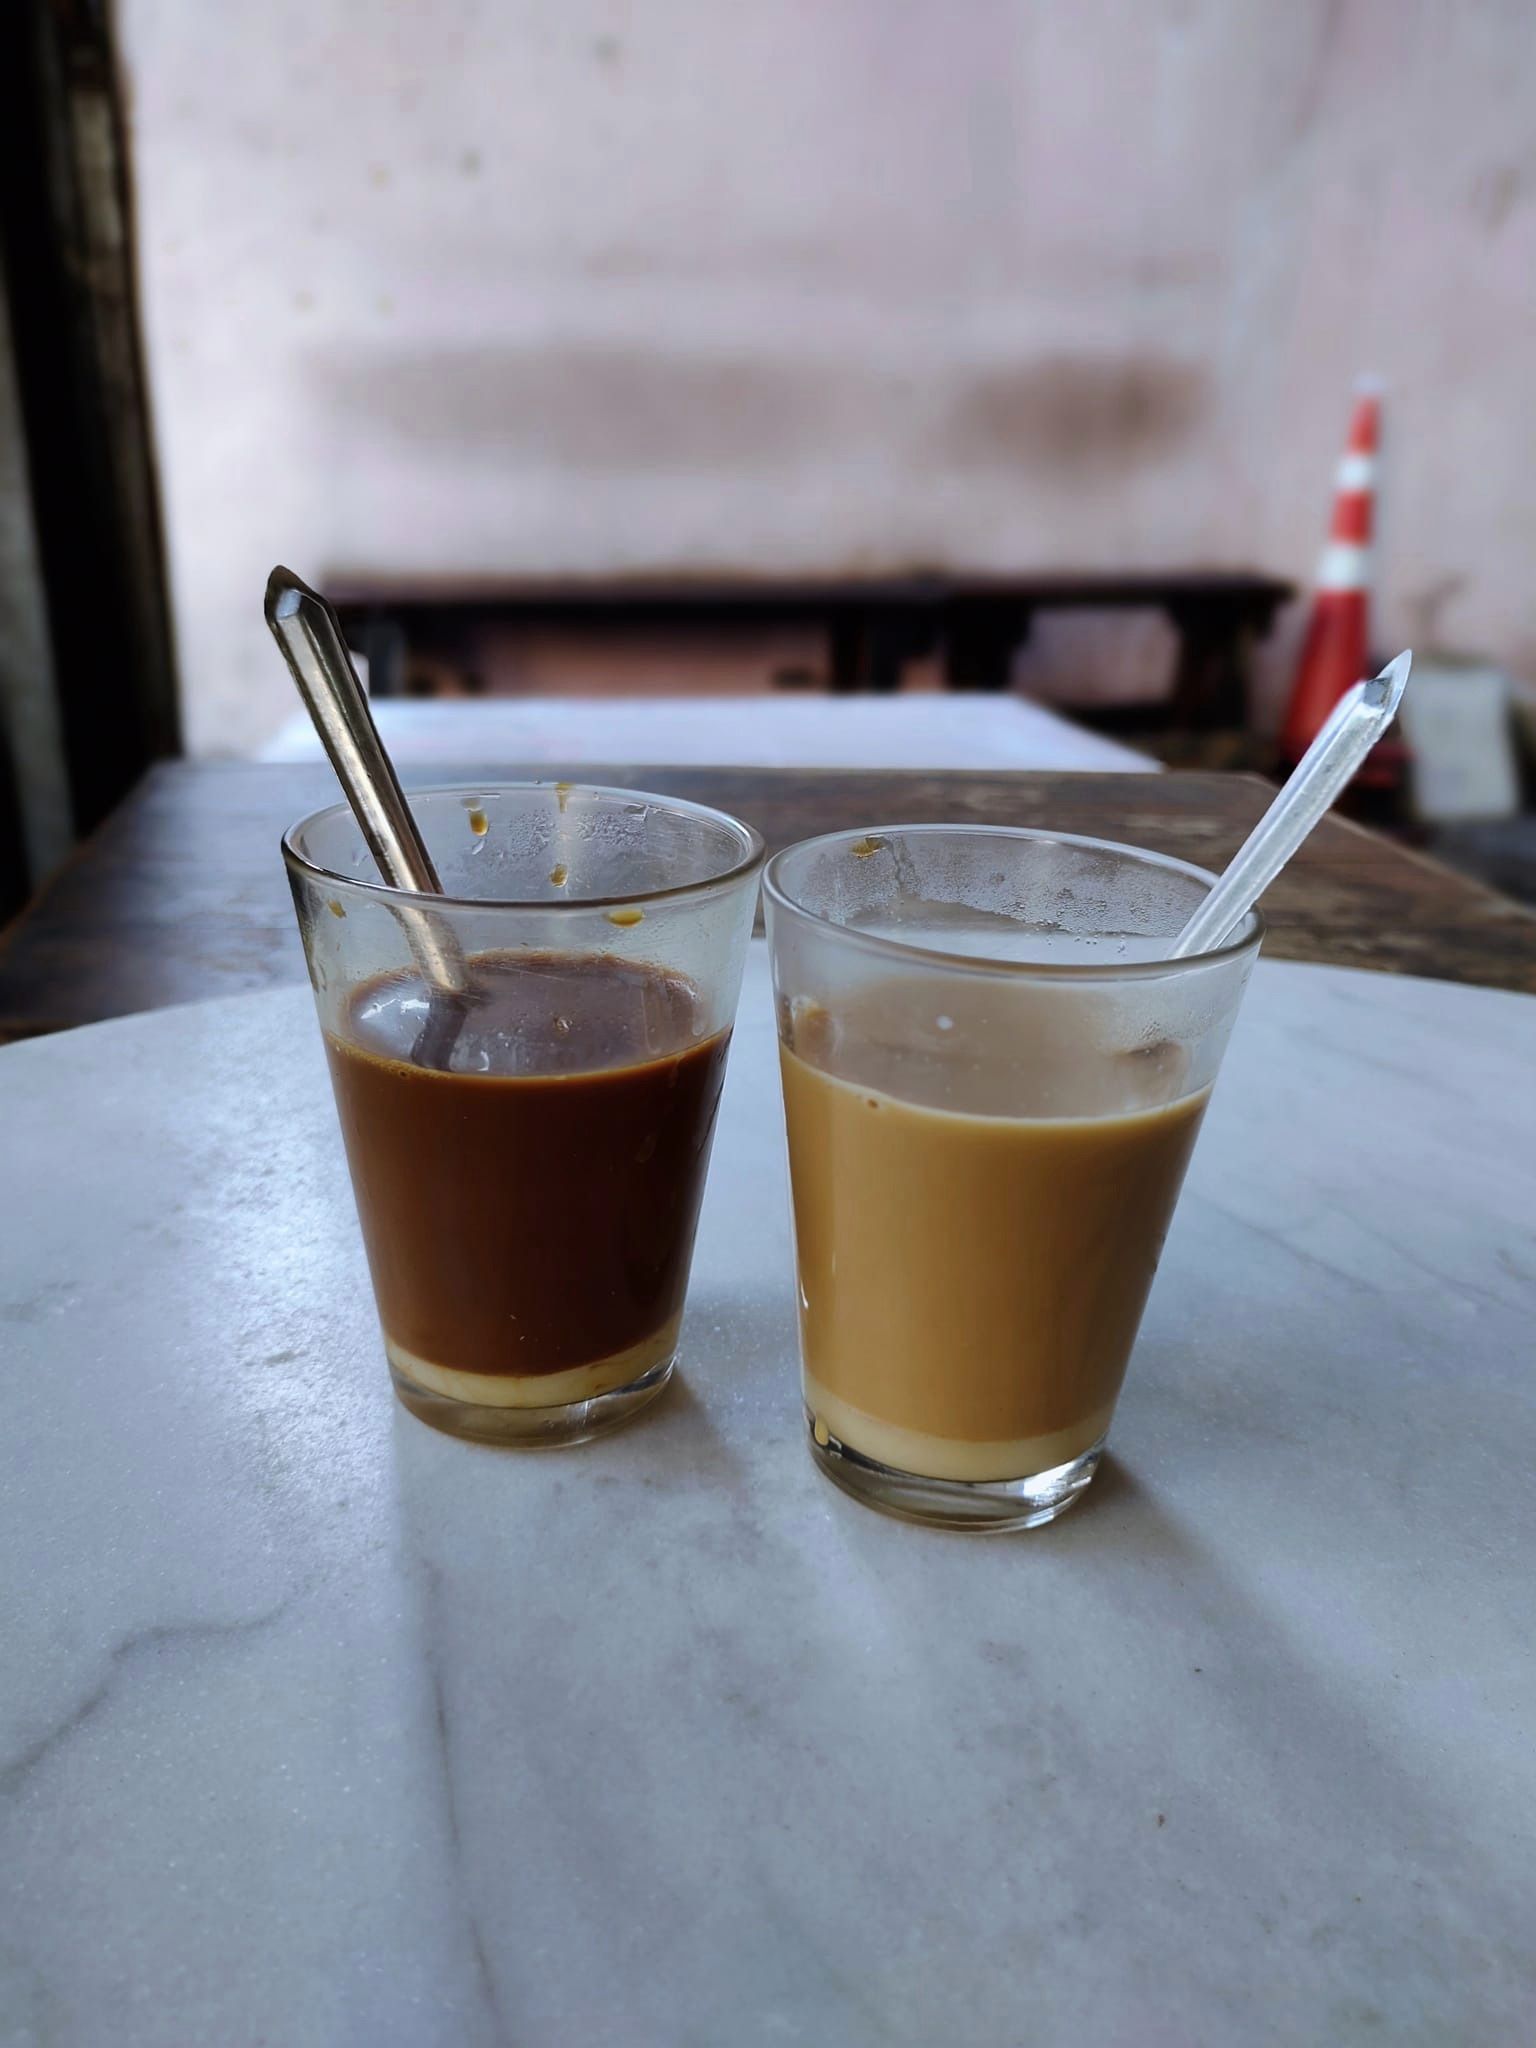 Tang Bak Seng Antique Coffee